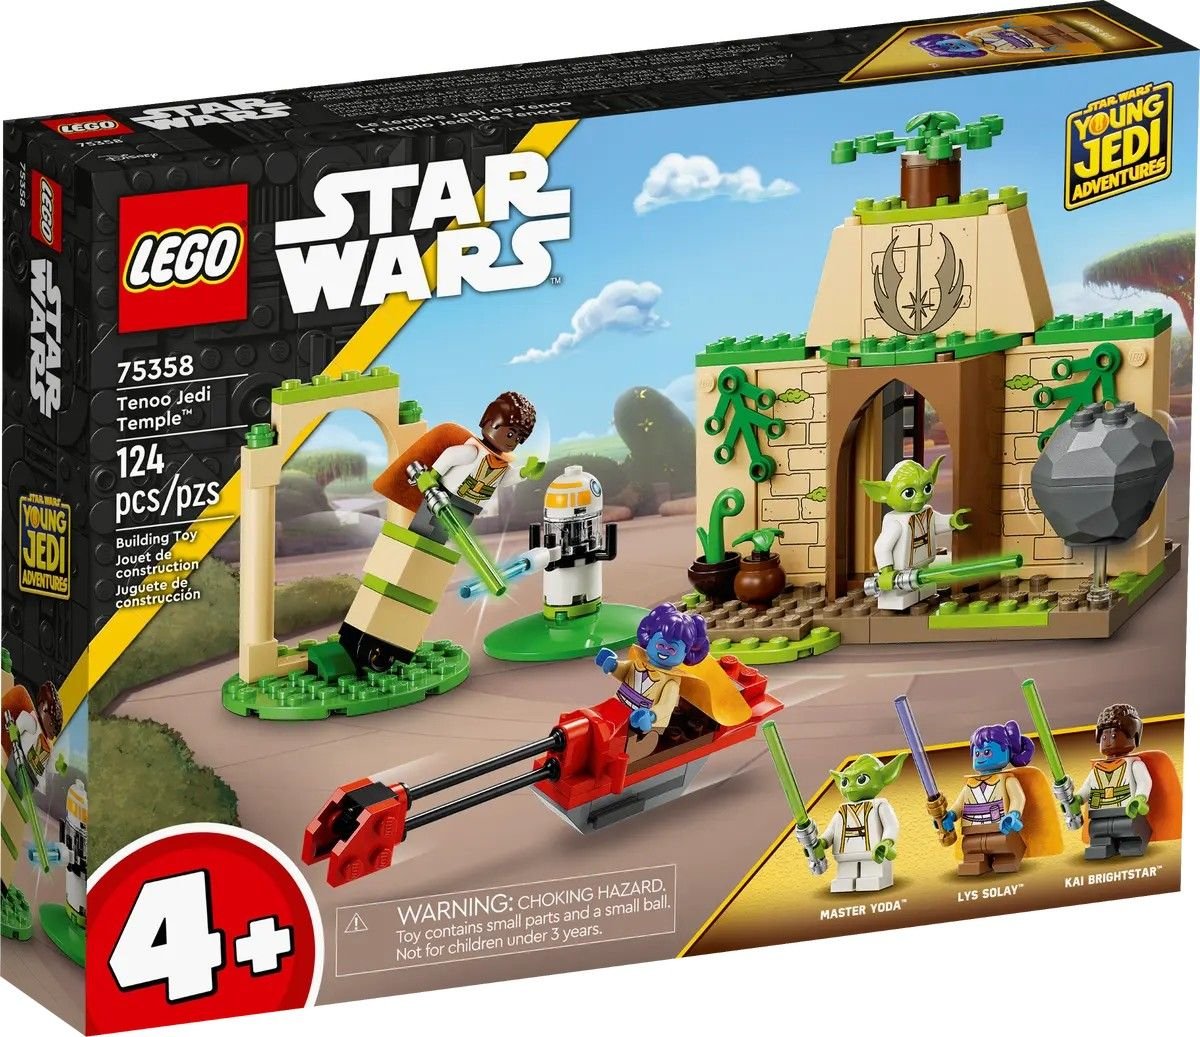 Tenoo Jedi Temple LEGO Star Wars 75358